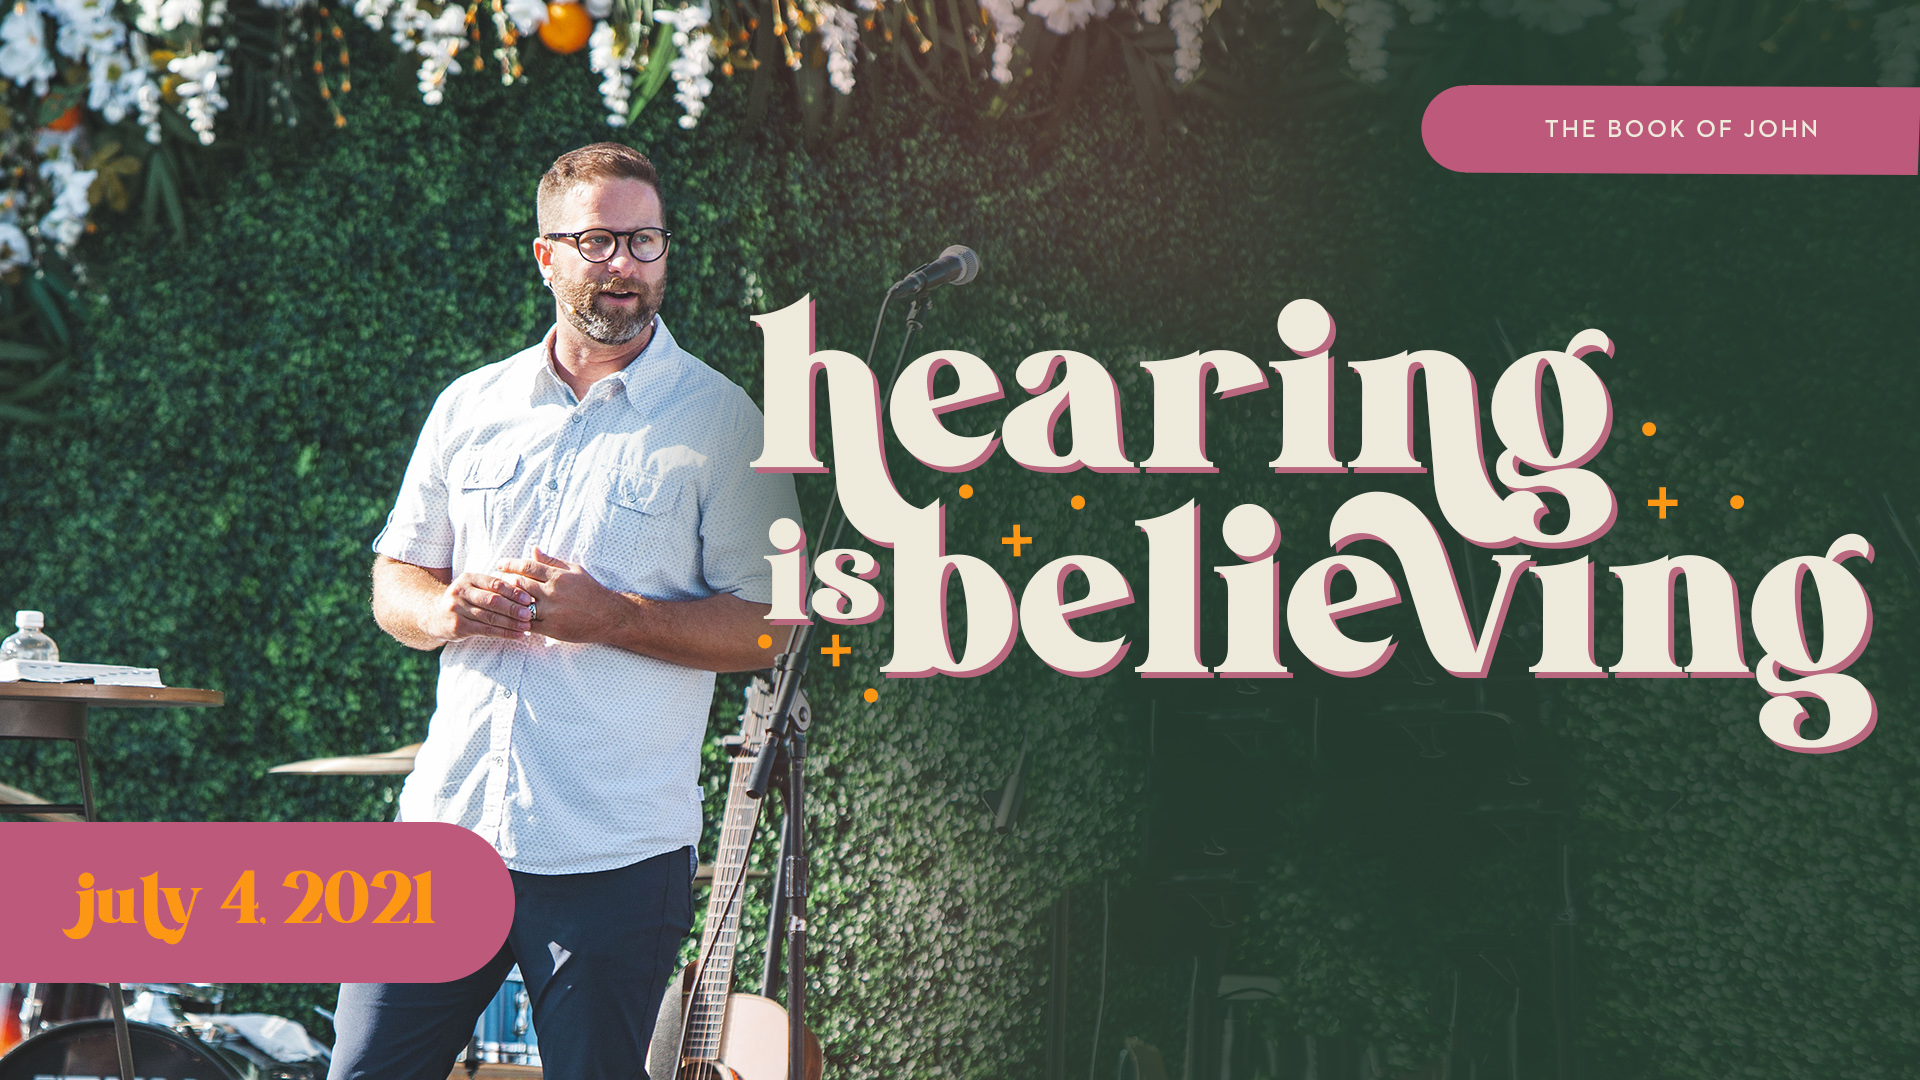 Hearing is Believing